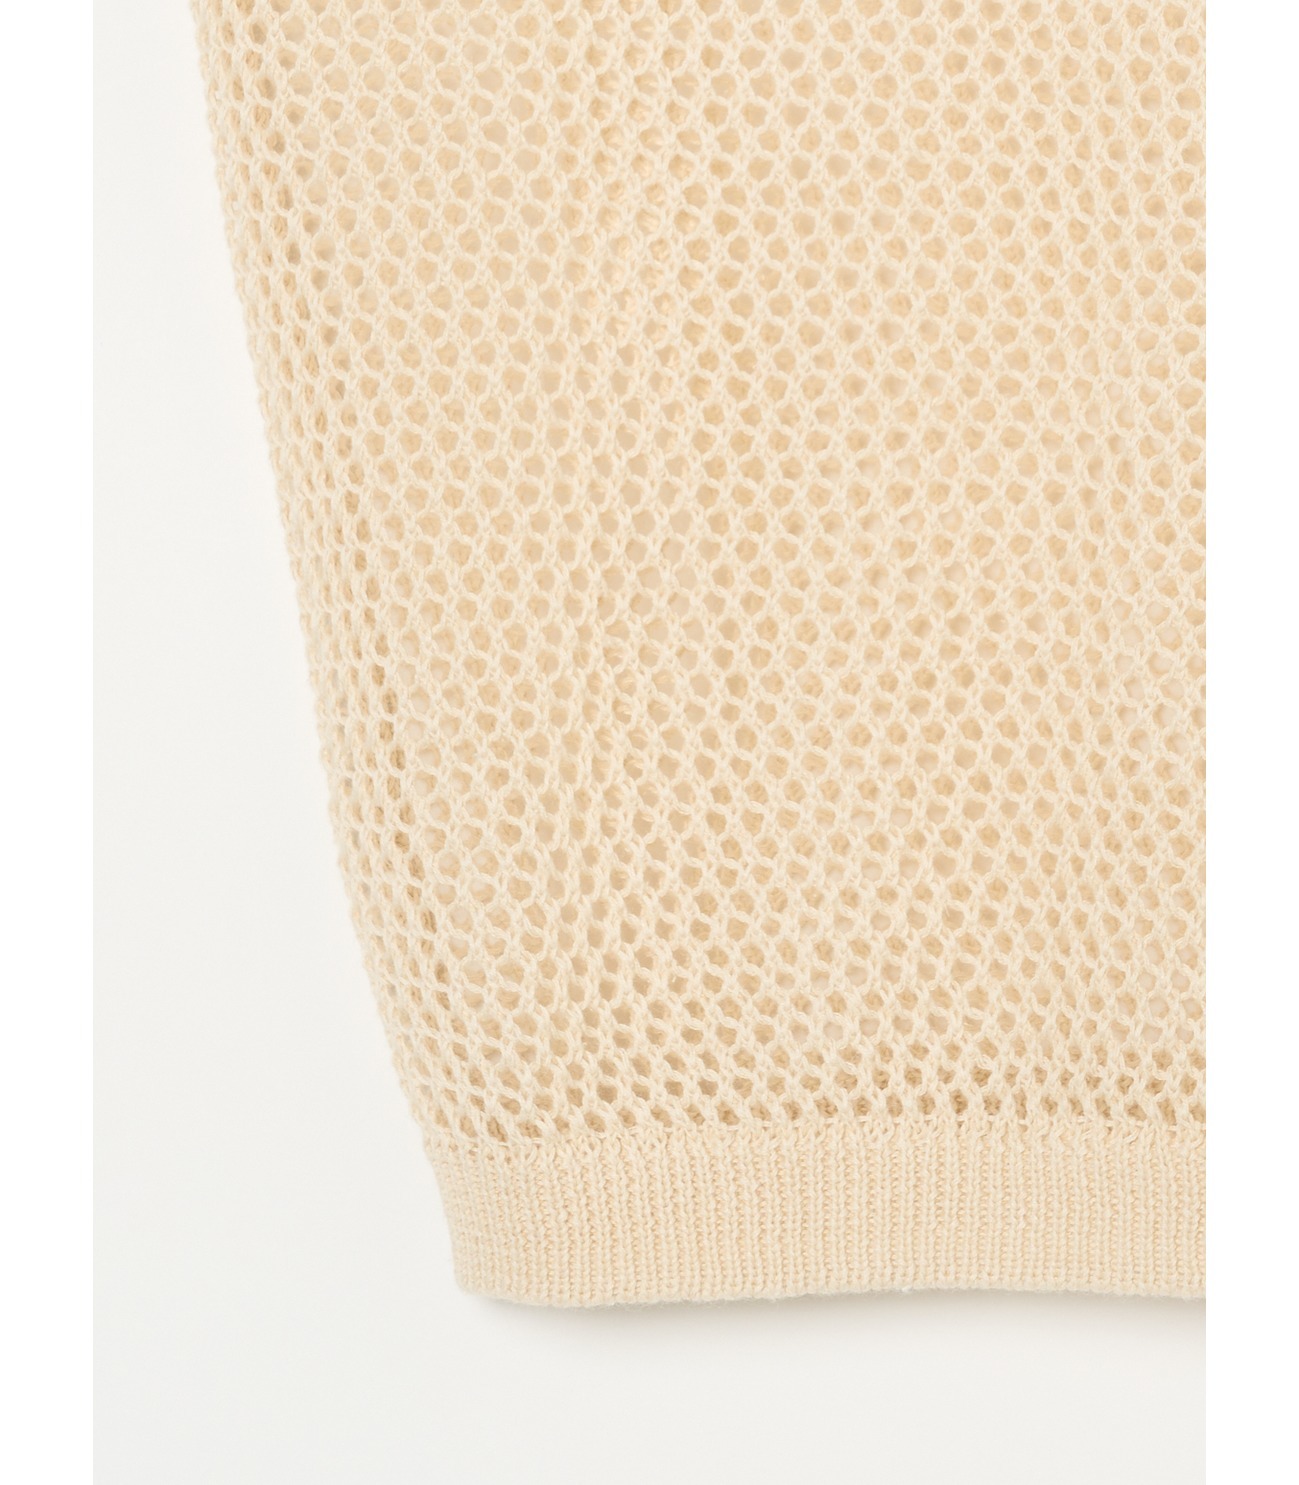 Cotton linen mesh s/s top 詳細画像 off white 4